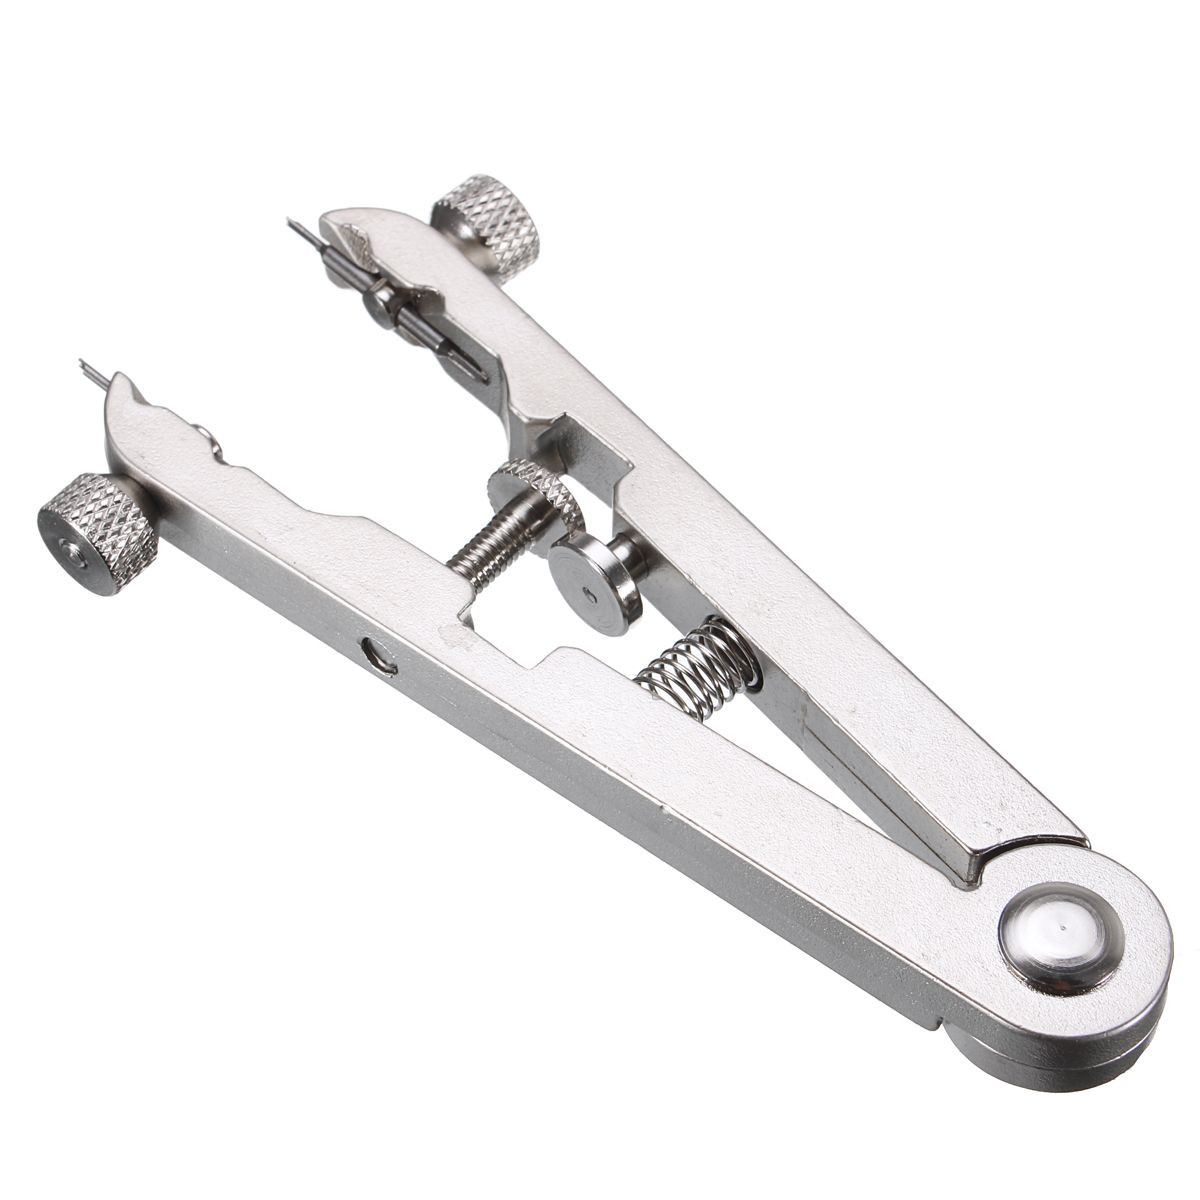 Bracelet-Spring-Bar-Remover-Watch-Tweezer-Strip-Replace-Tool-For-ROLEX-6825-1183855